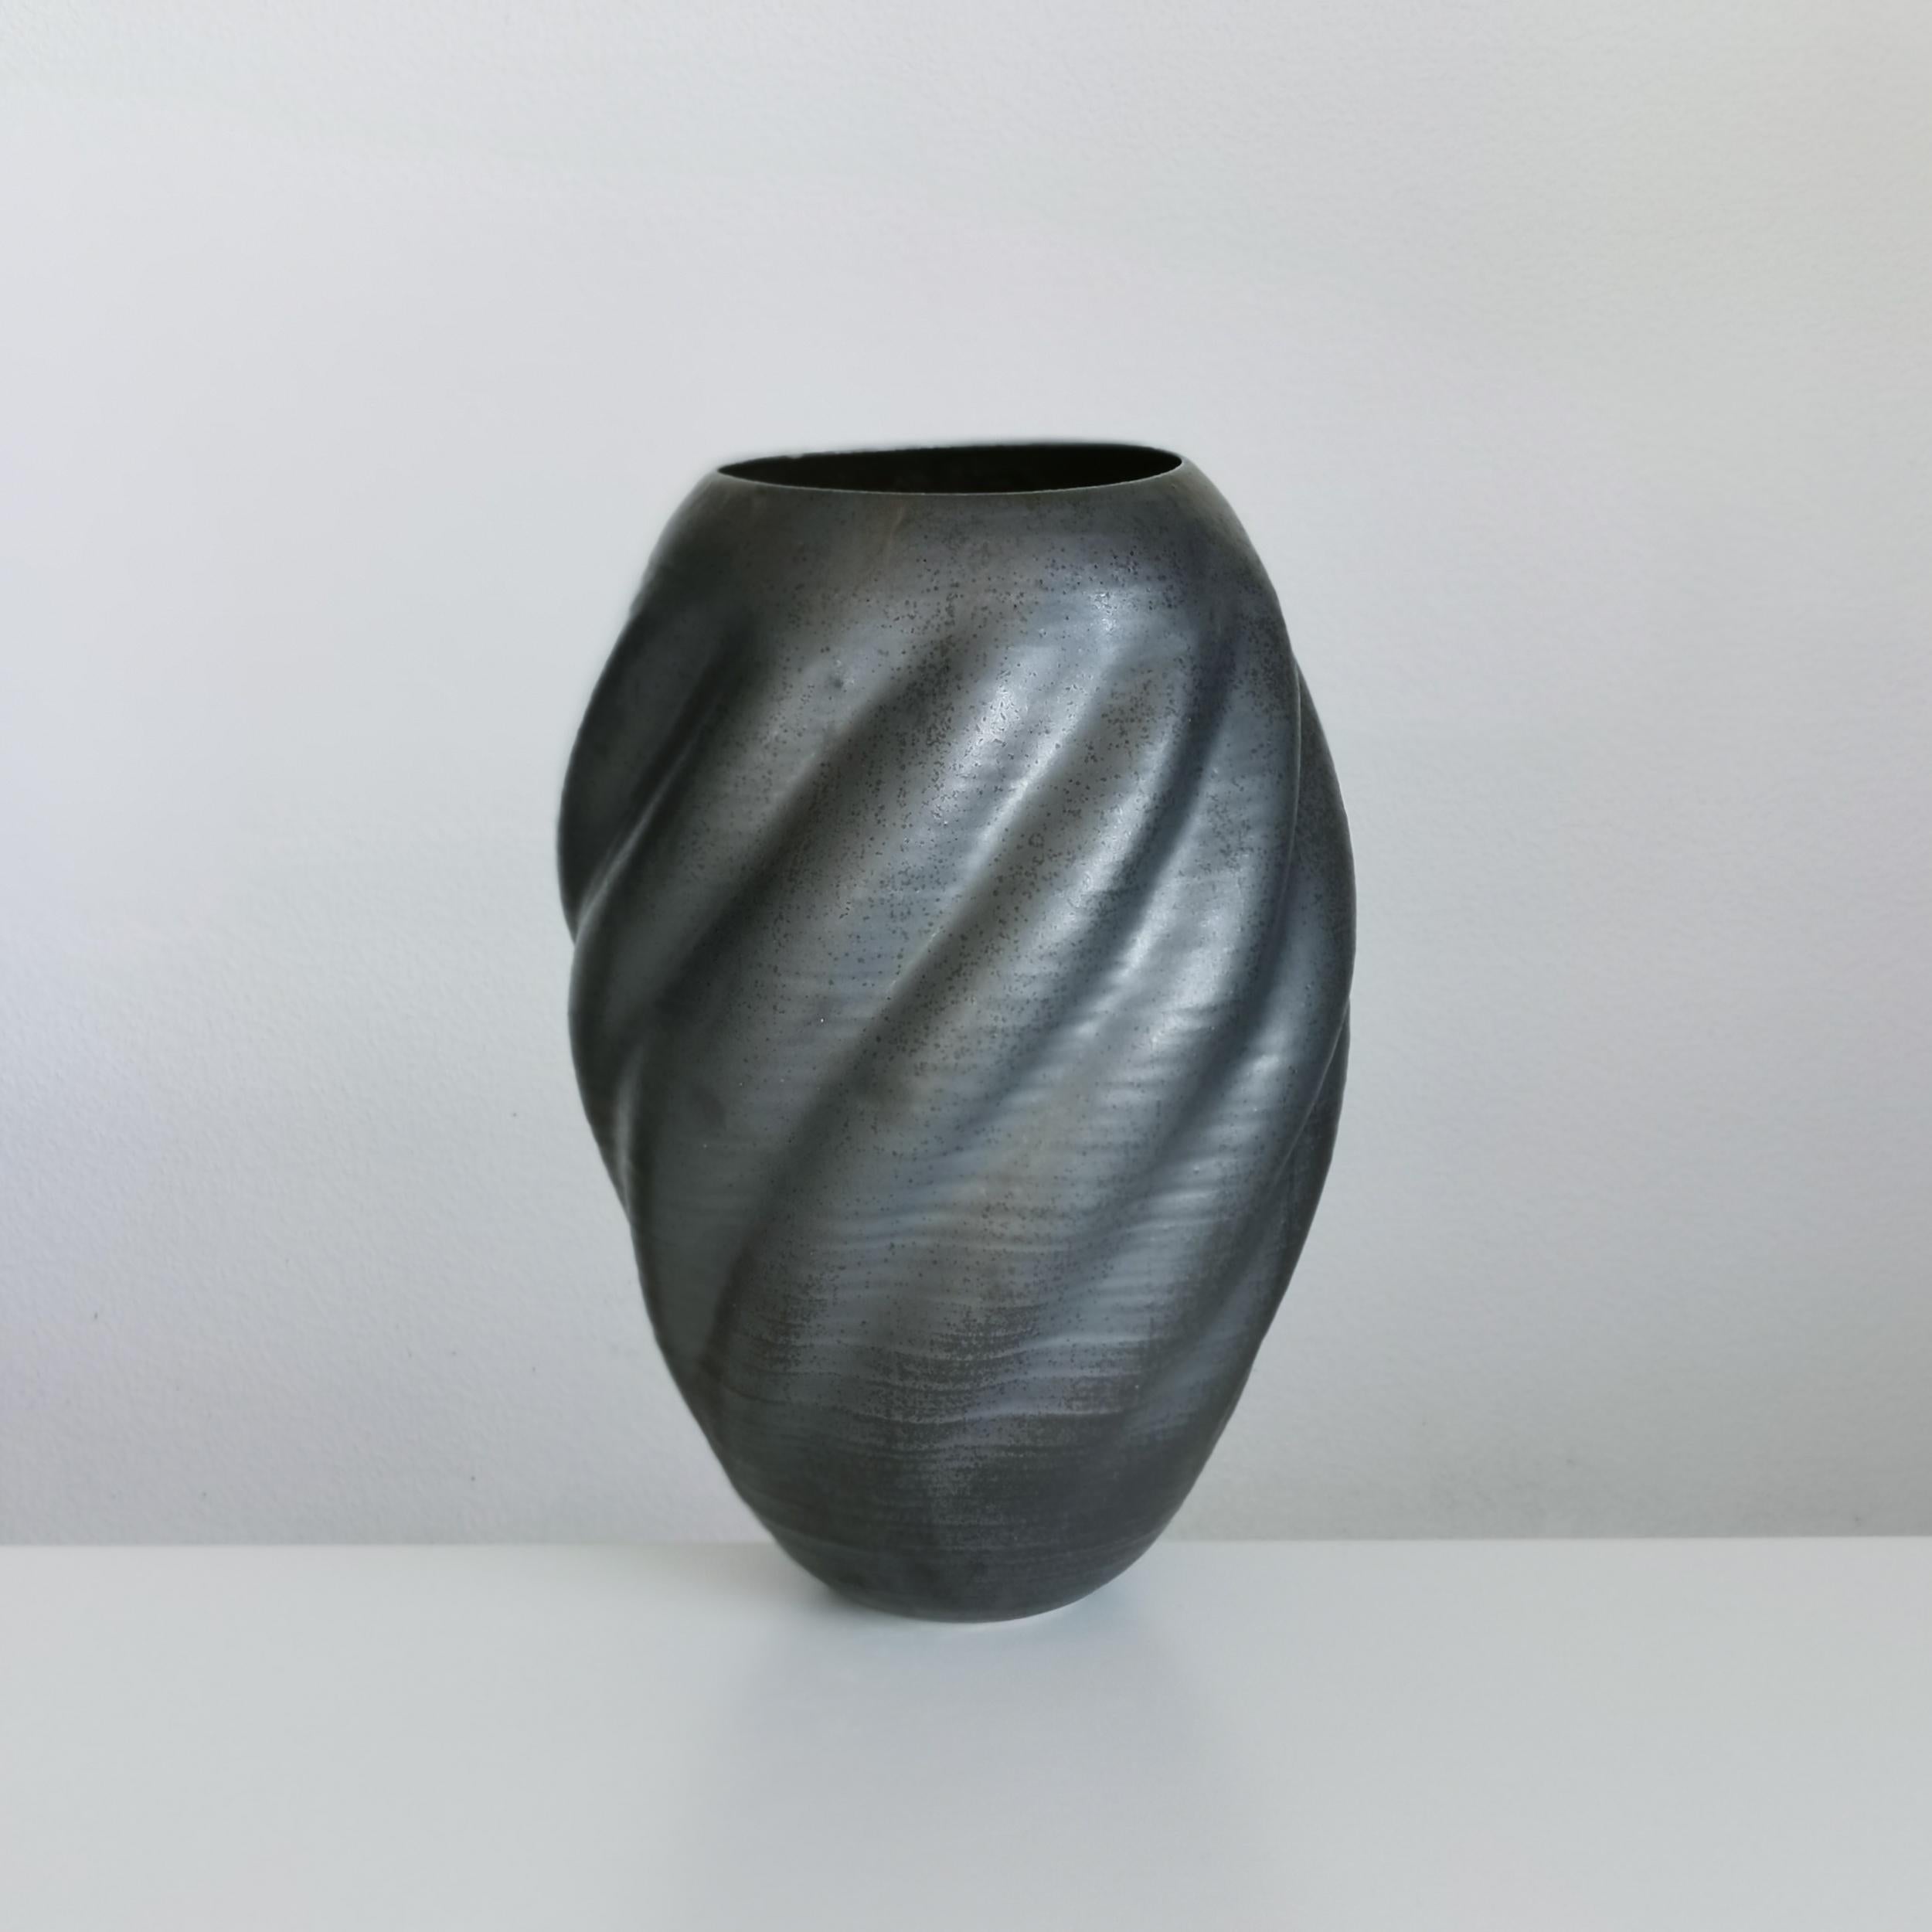 Spanish Unique Ceramic Sculpture Vessel N.55, Black Wave Form, Objet d'Art For Sale